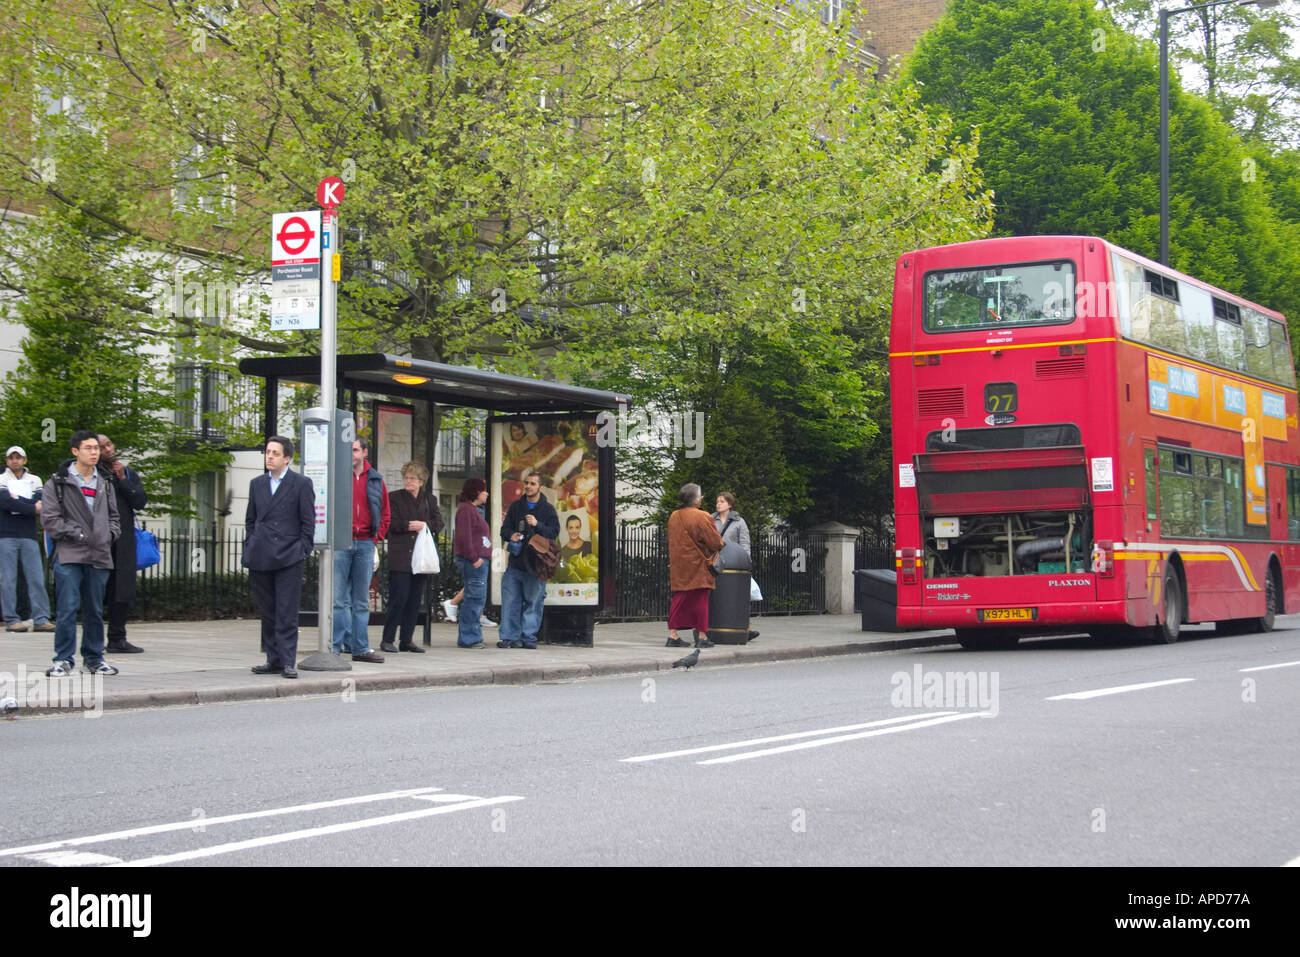 day Public transport bus stop engine breakdown unreliable london England Britain United Kingdom UK Stock Photo